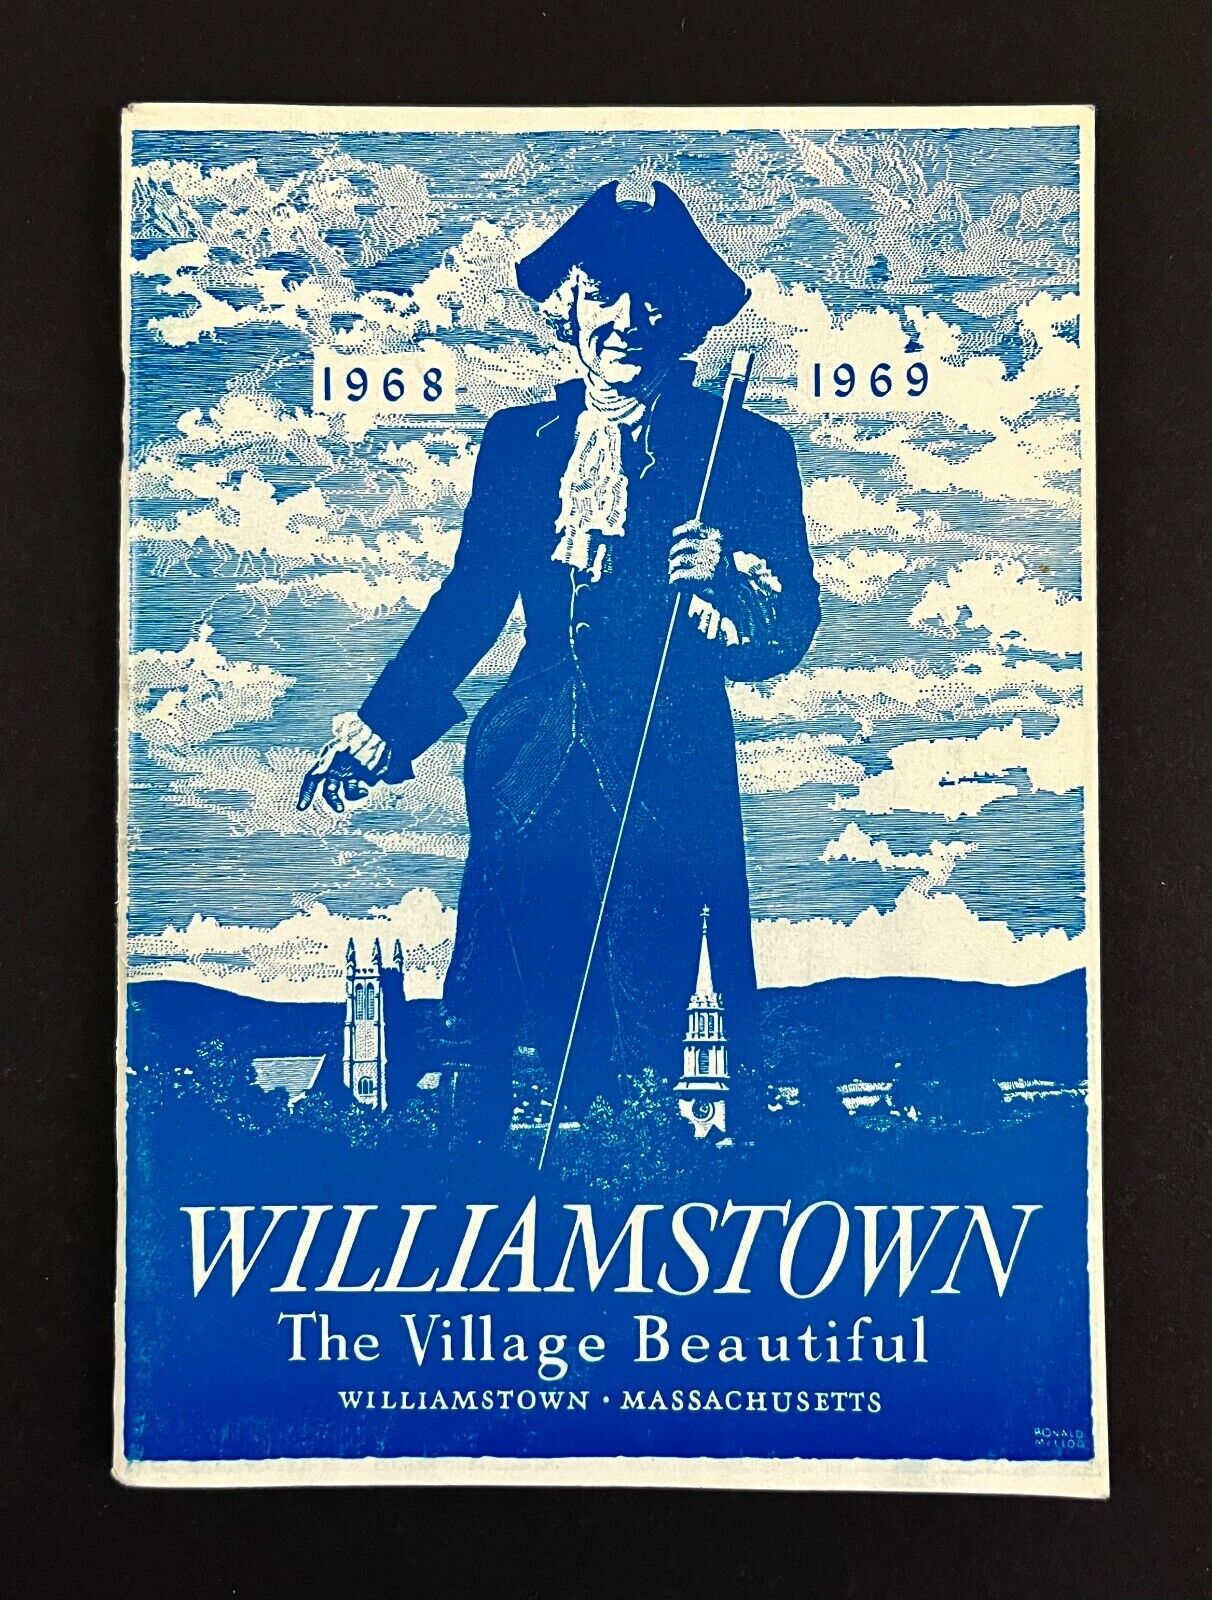 1968-69 Williamstown Massachusetts Village Beautiful Vtg Travel Guide Tourist